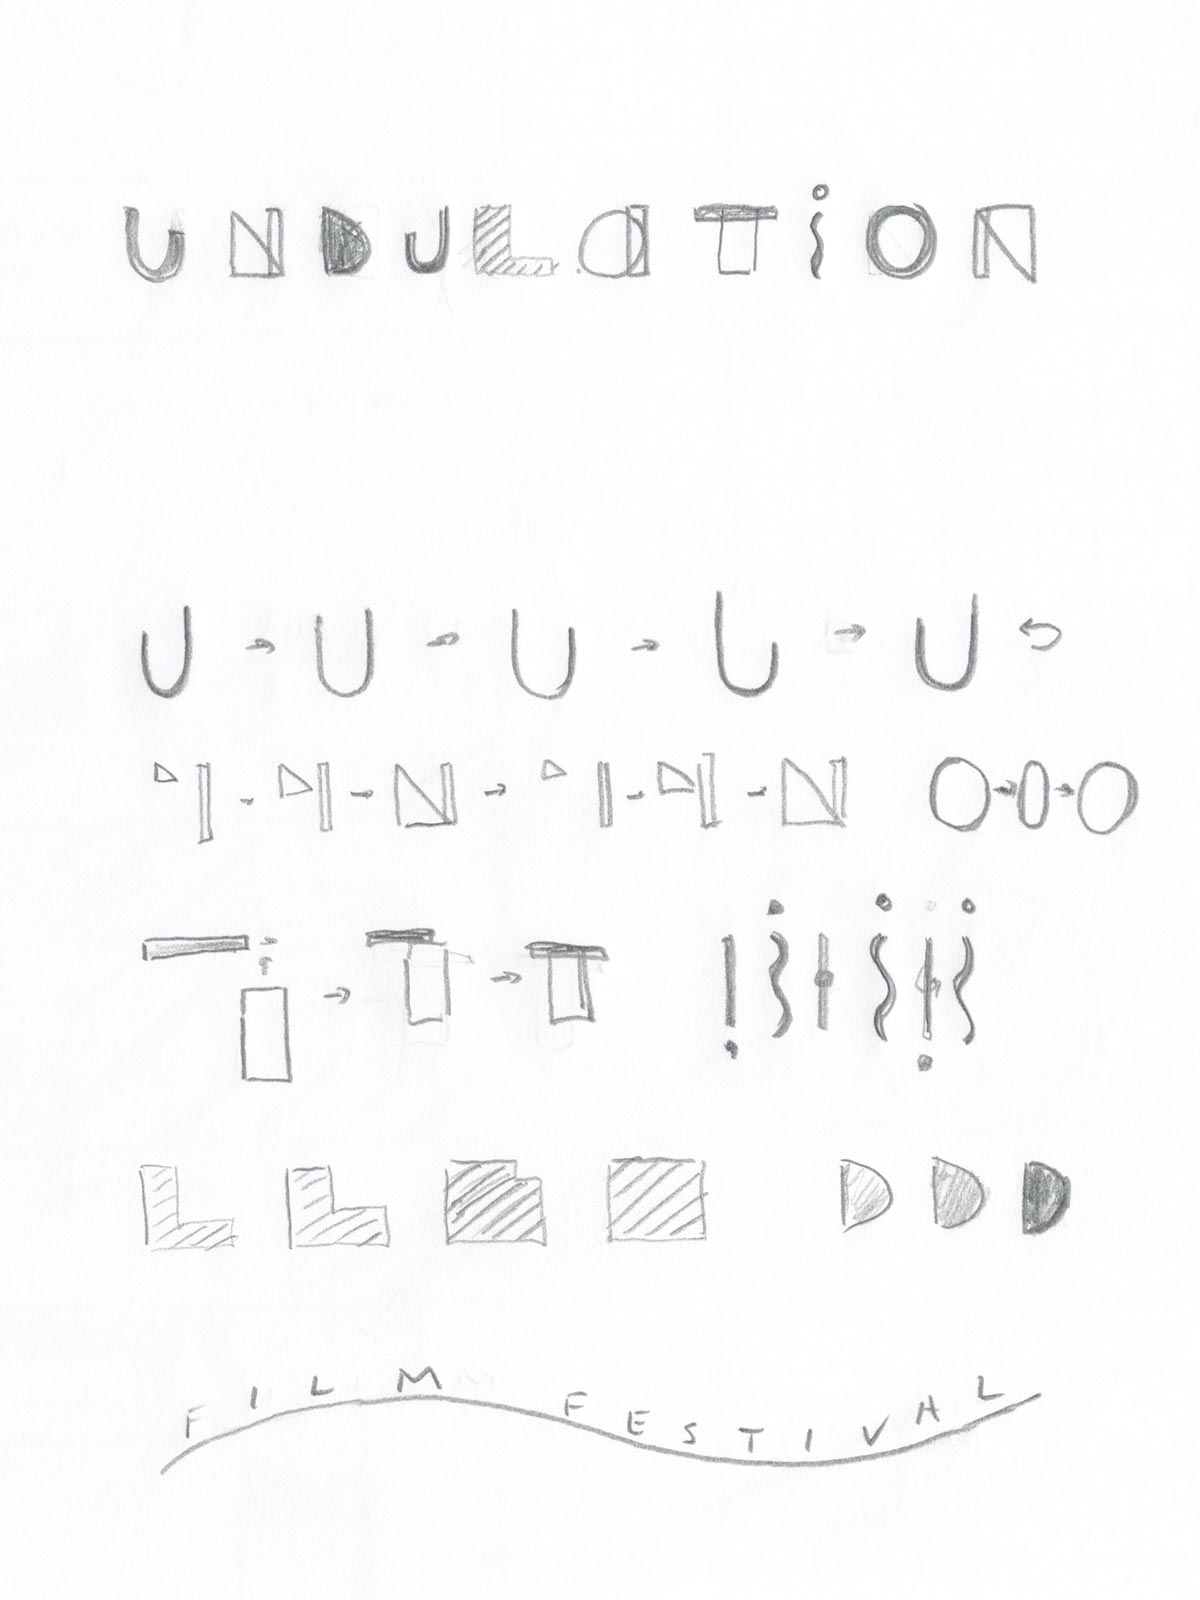 letterform sketches